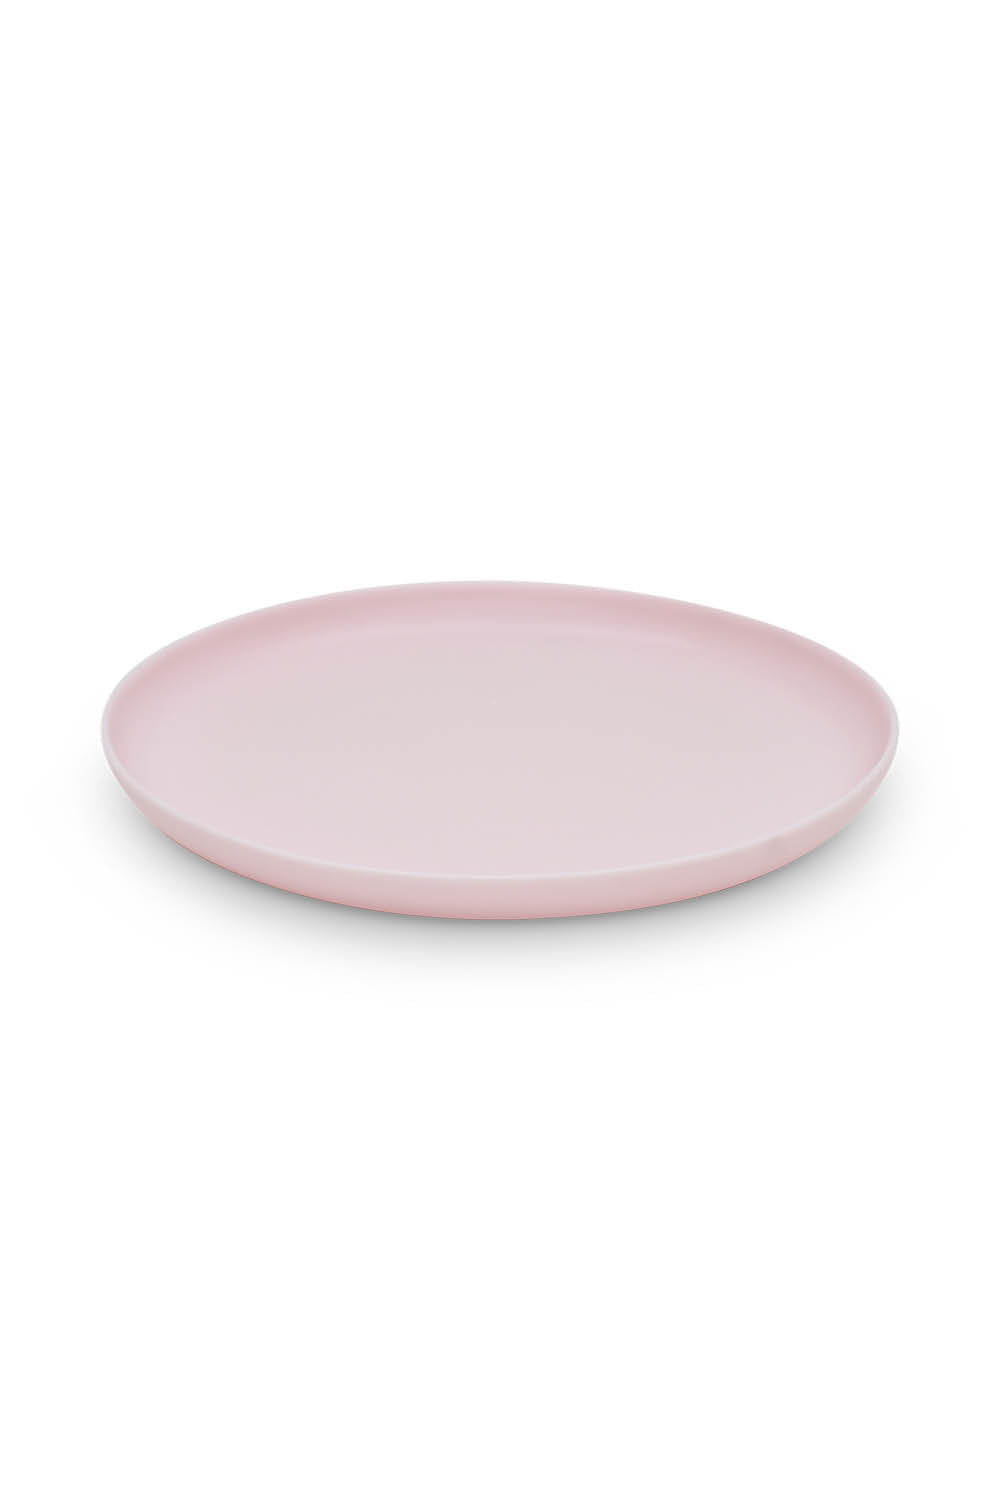 MODERN Medium Platter in Pale Rose